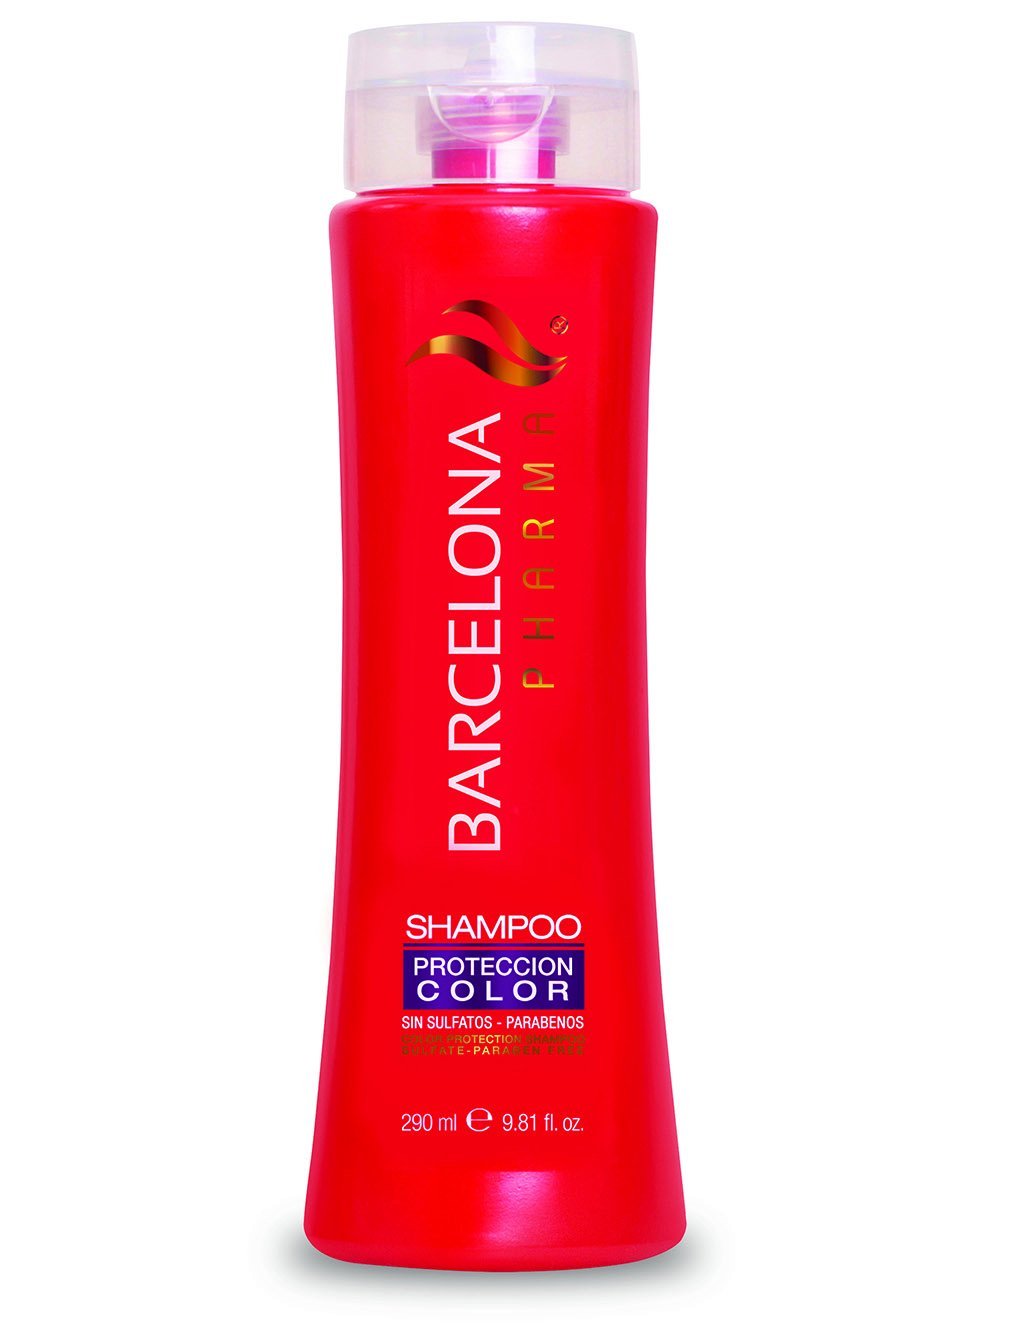 Shampoo Proteccion Color Barcelona Pharma